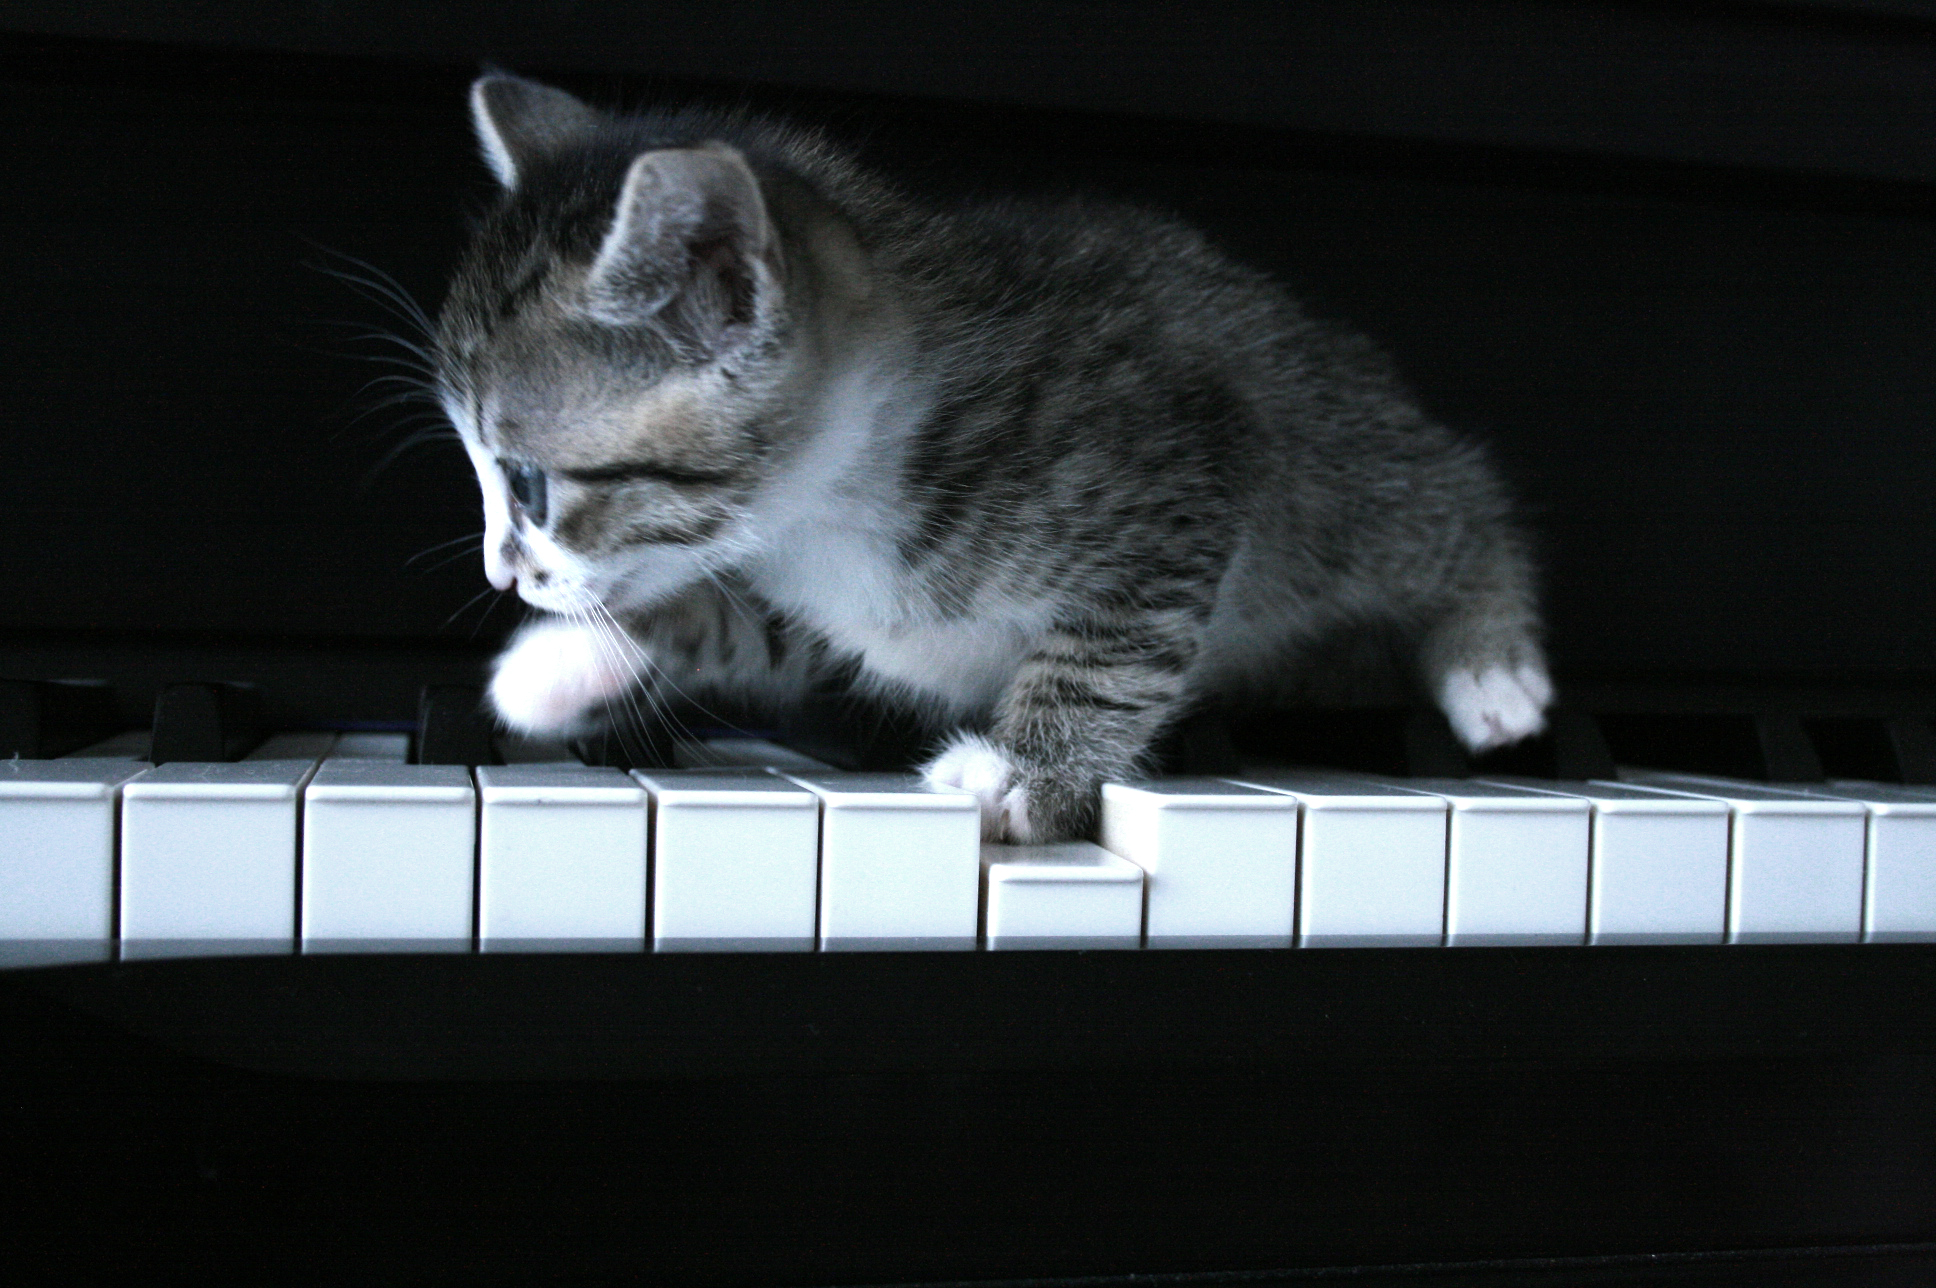 piano, cats, grayscale, kittens - desktop wallpaper